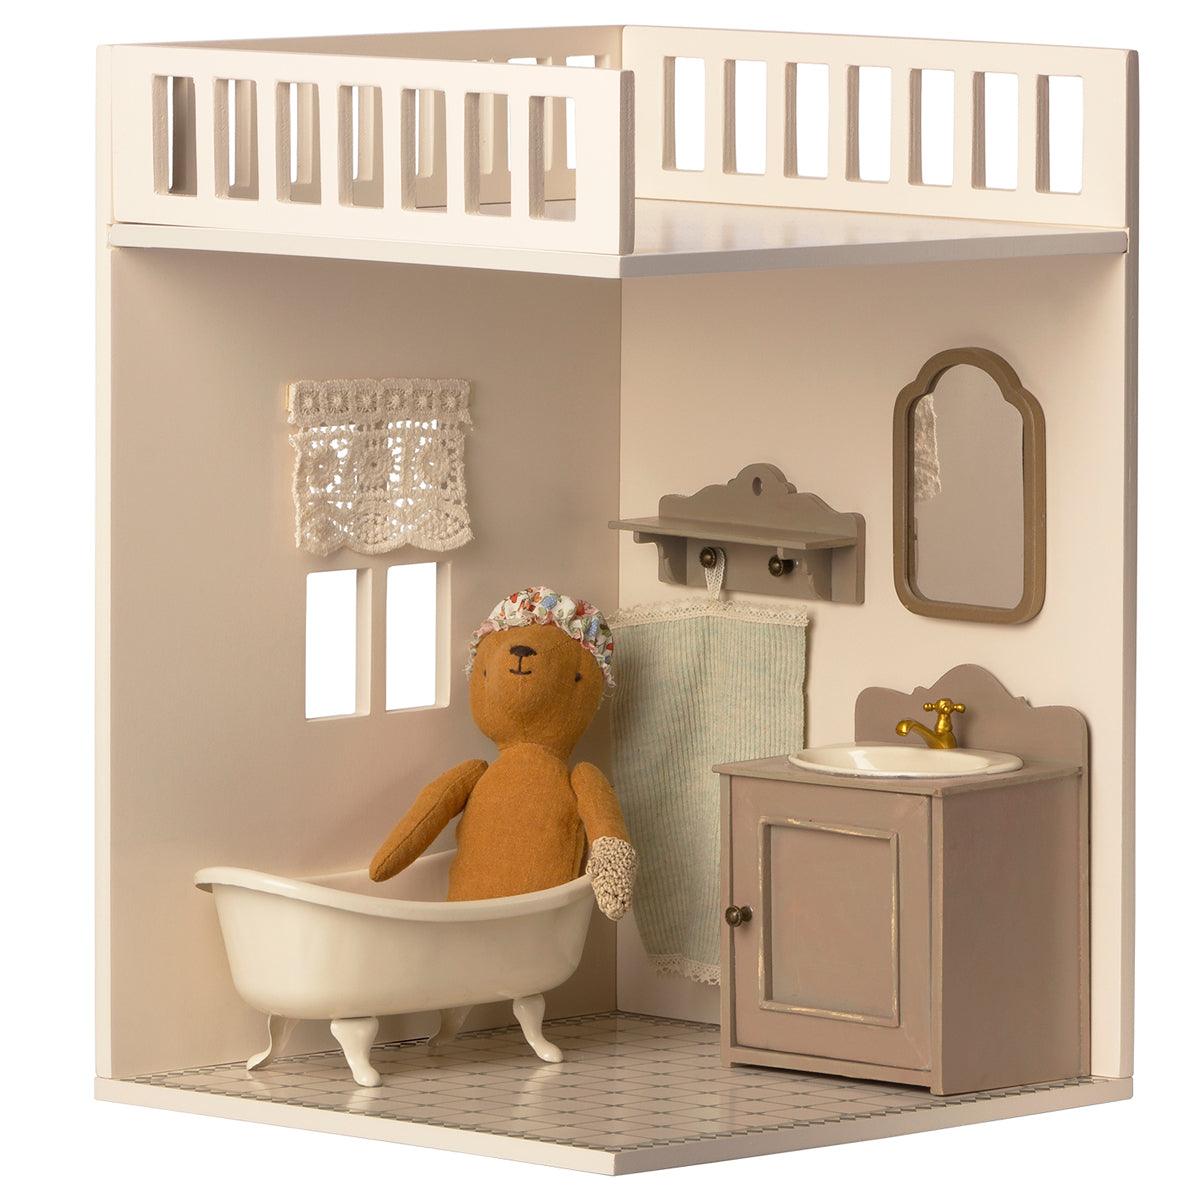 Maileg House of miniature bathroom